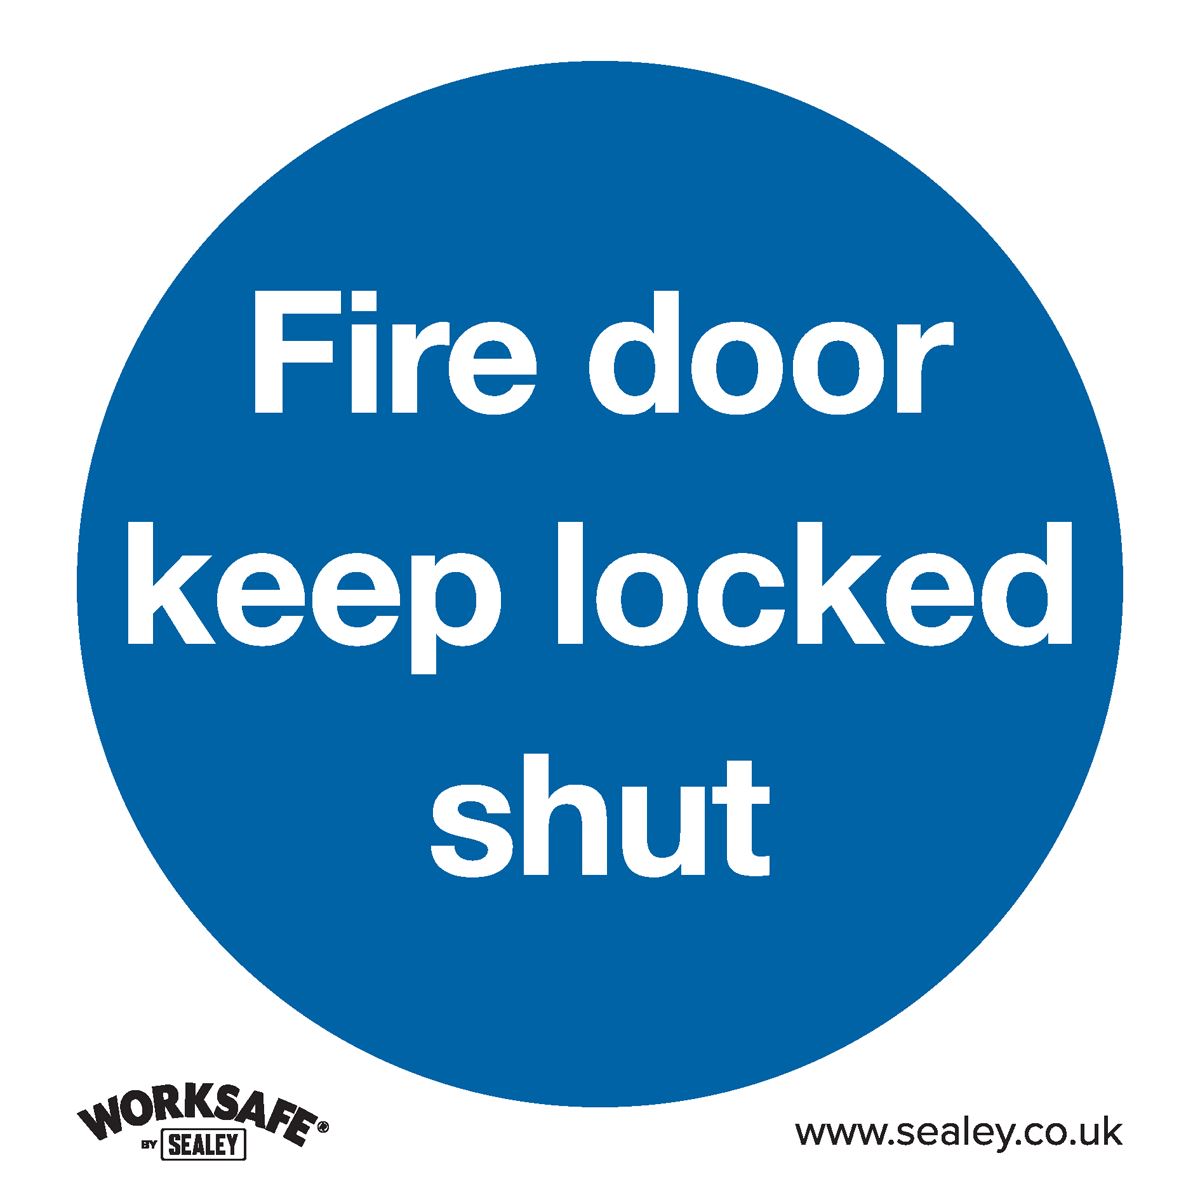 Worksafe by Sealey Mandatory Safety Sign - Fire Door Keep Locked Shut - Rigid Plastic